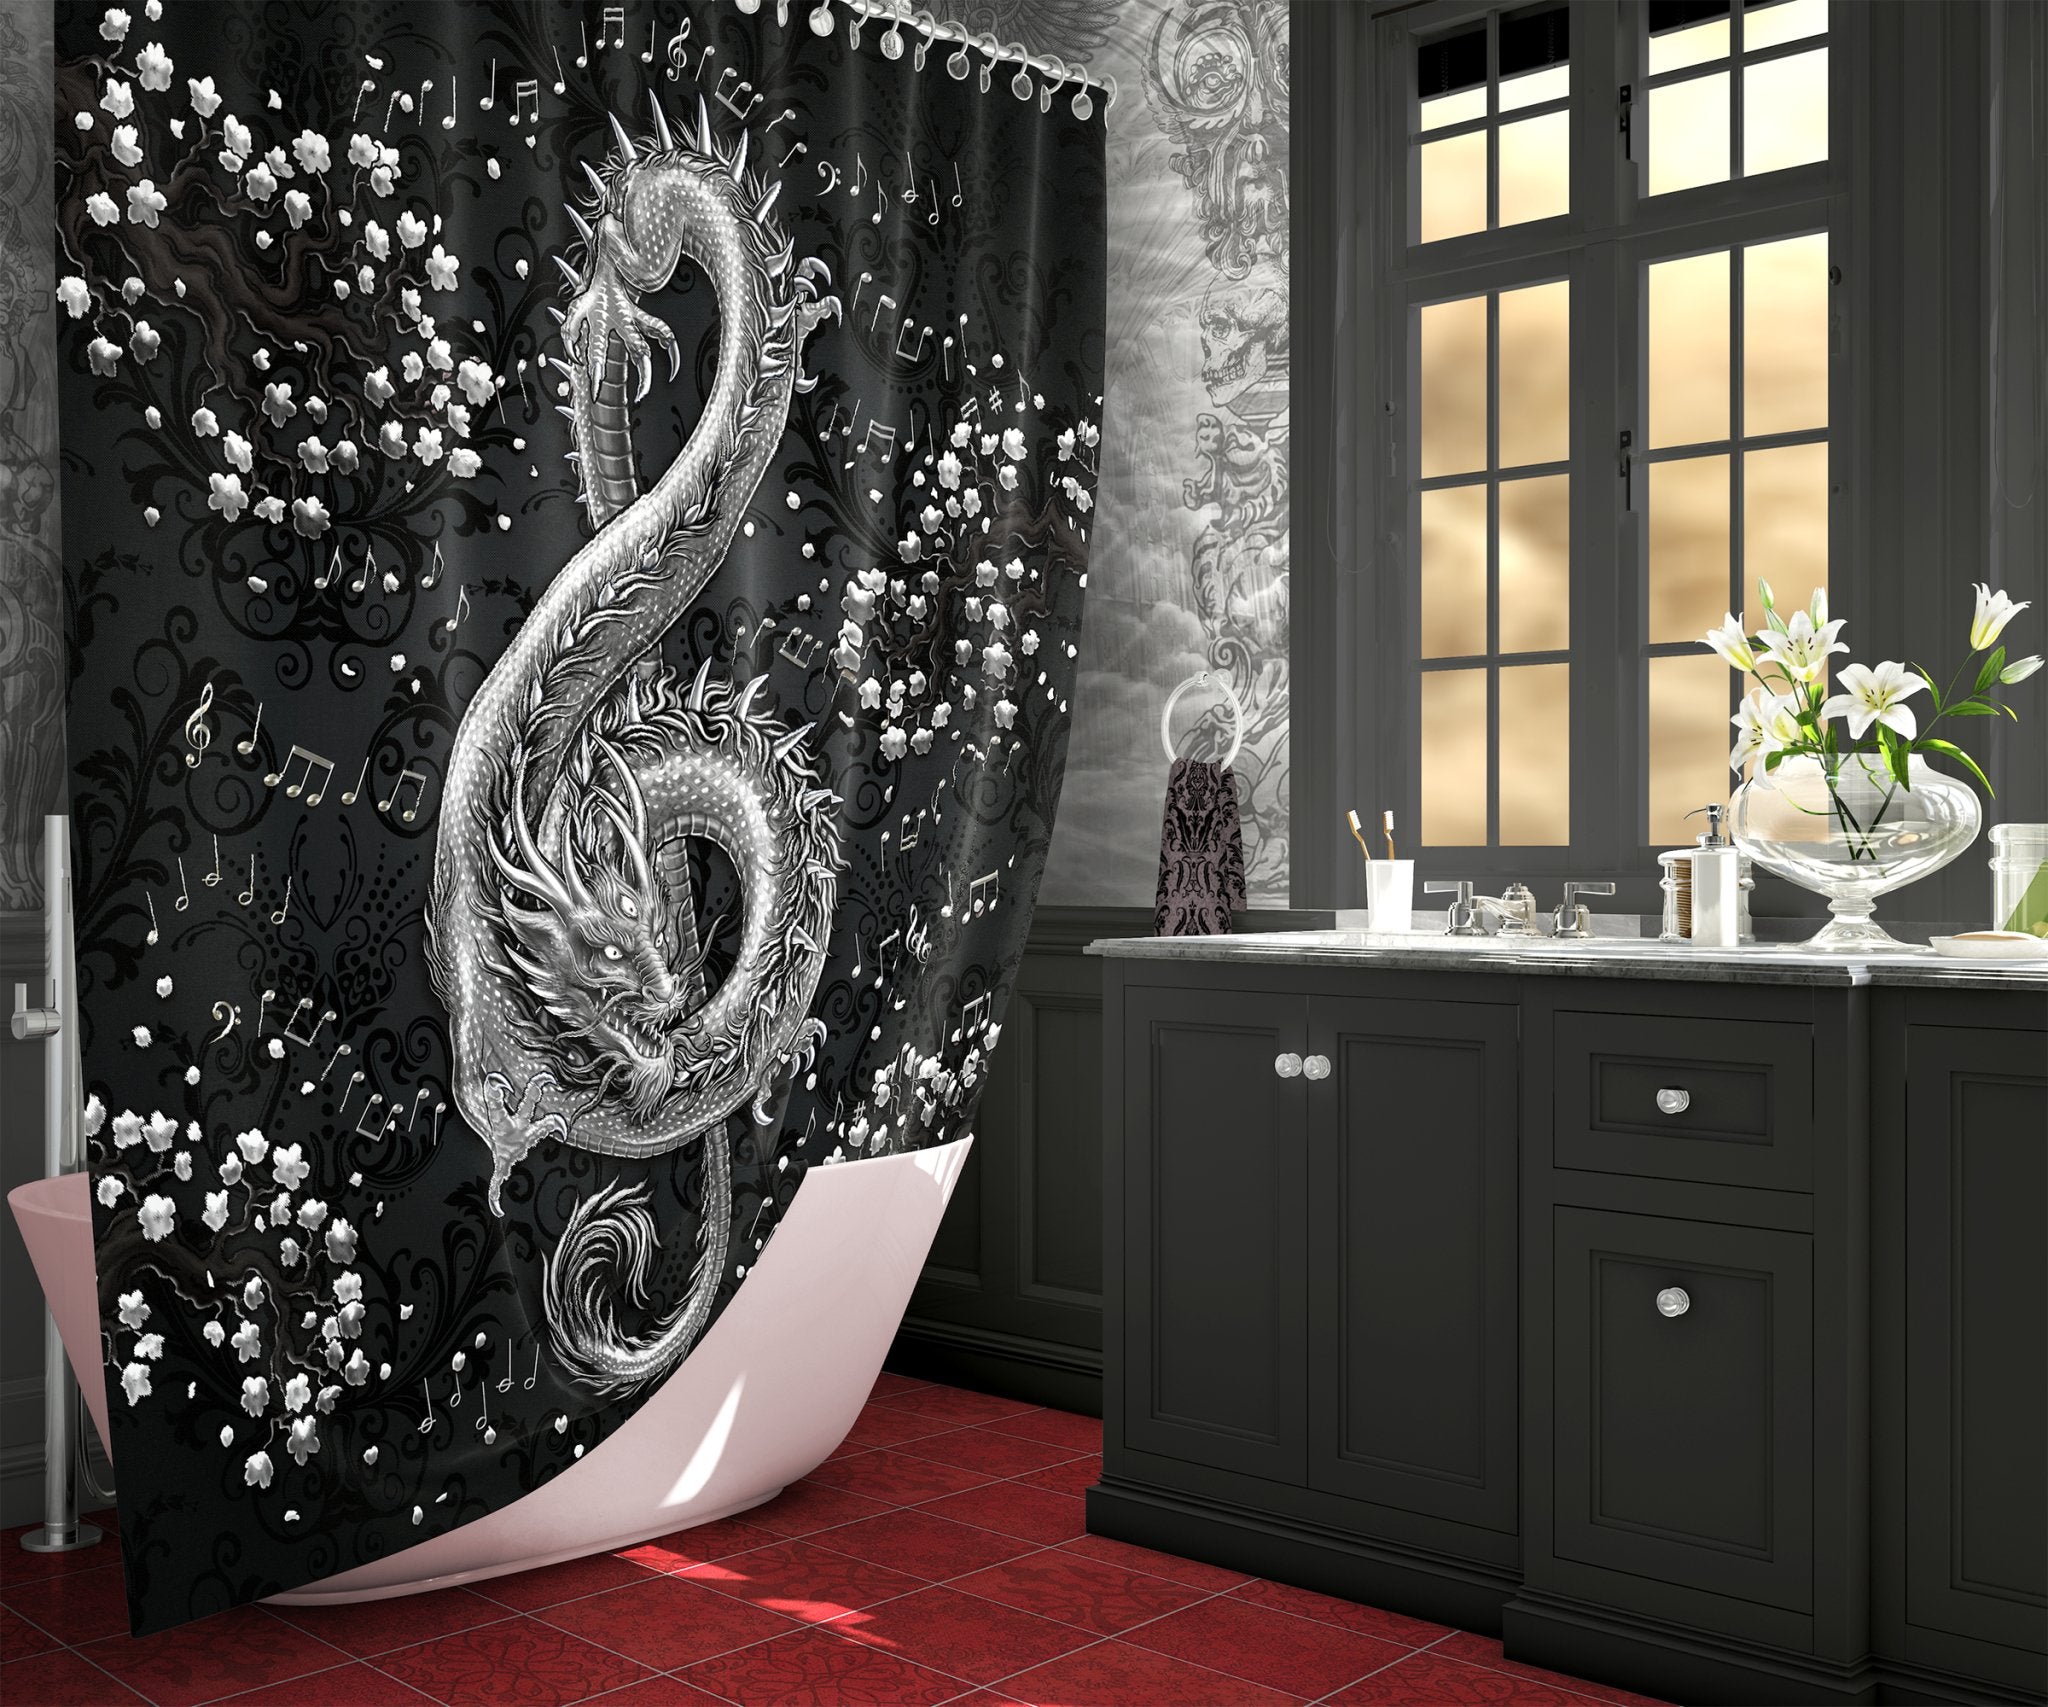 Silver Dragon Shower Curtain, 71x74 inches, Alternative Bathroom Decor, Treble Clef, Music Home Art - Black or Red, 2 Colors - Abysm Internal